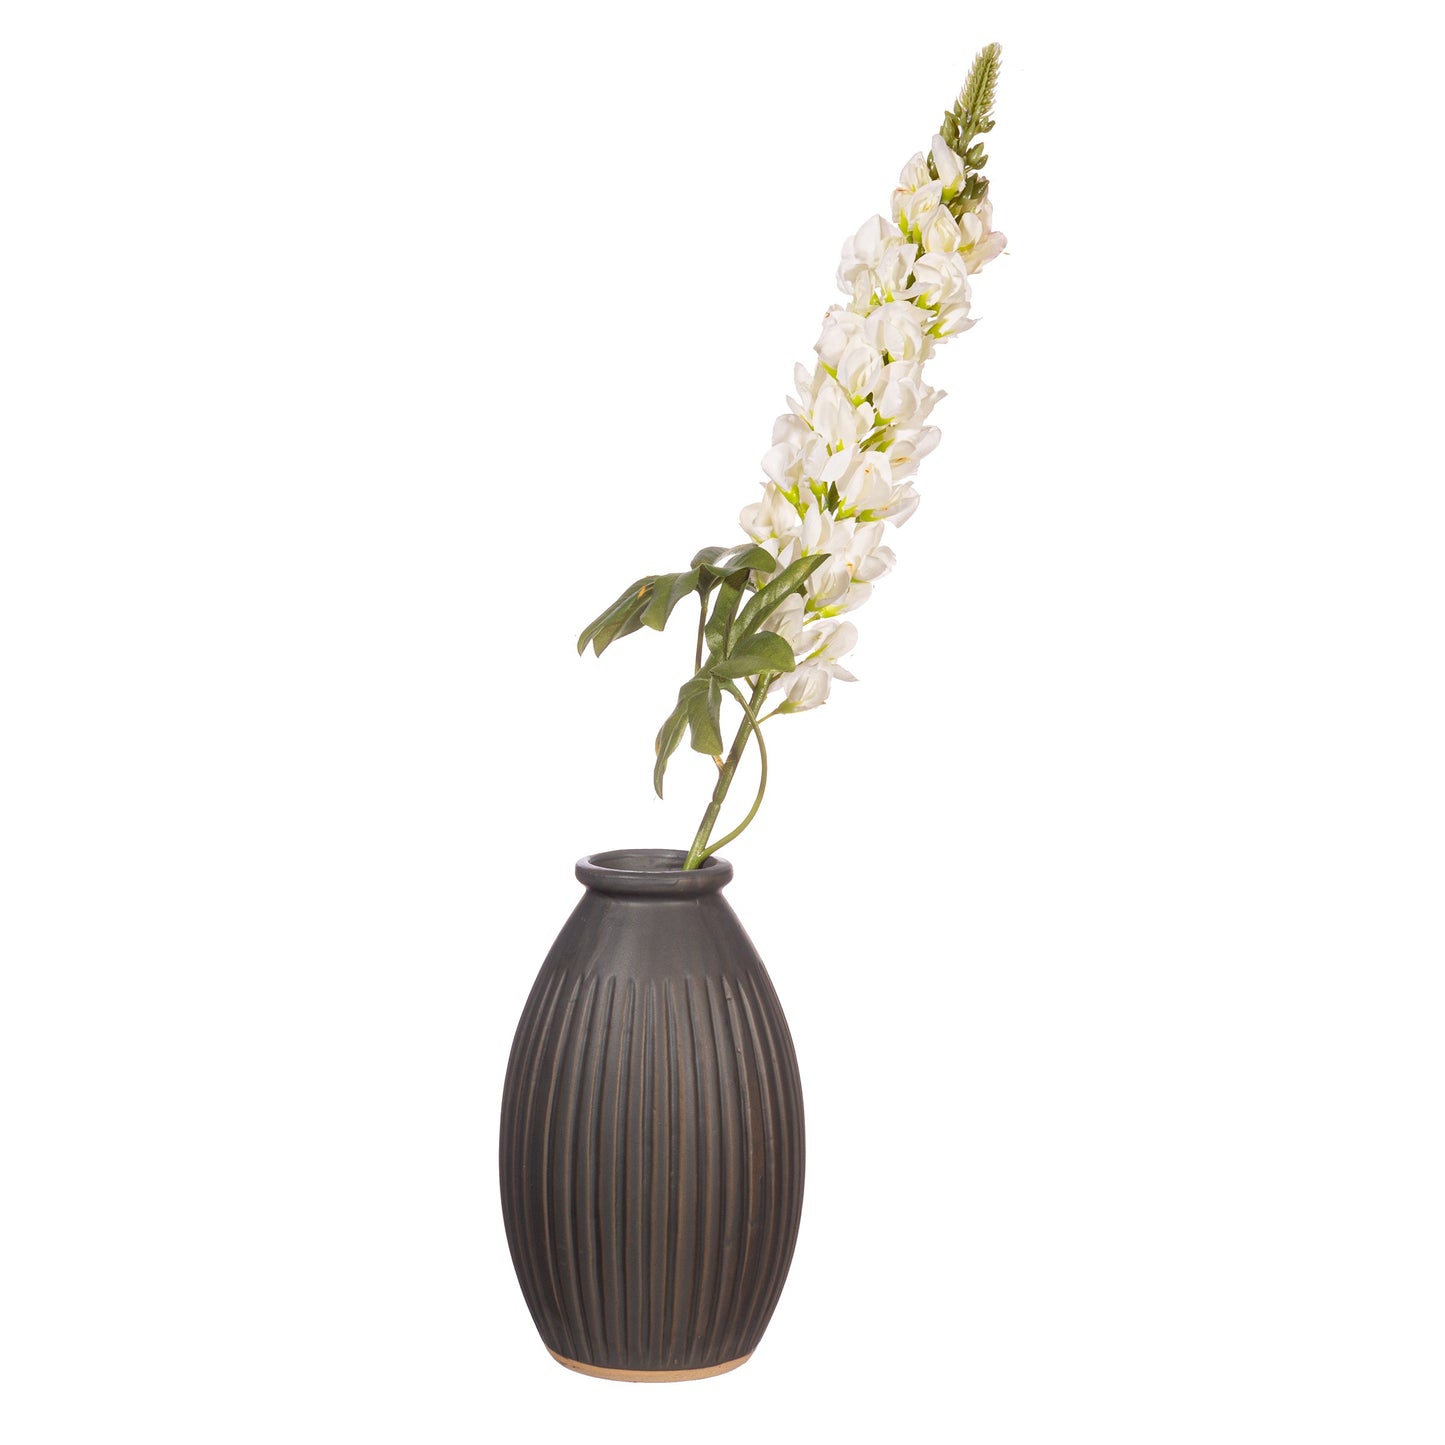 Grooved Textured Vase - ad&i